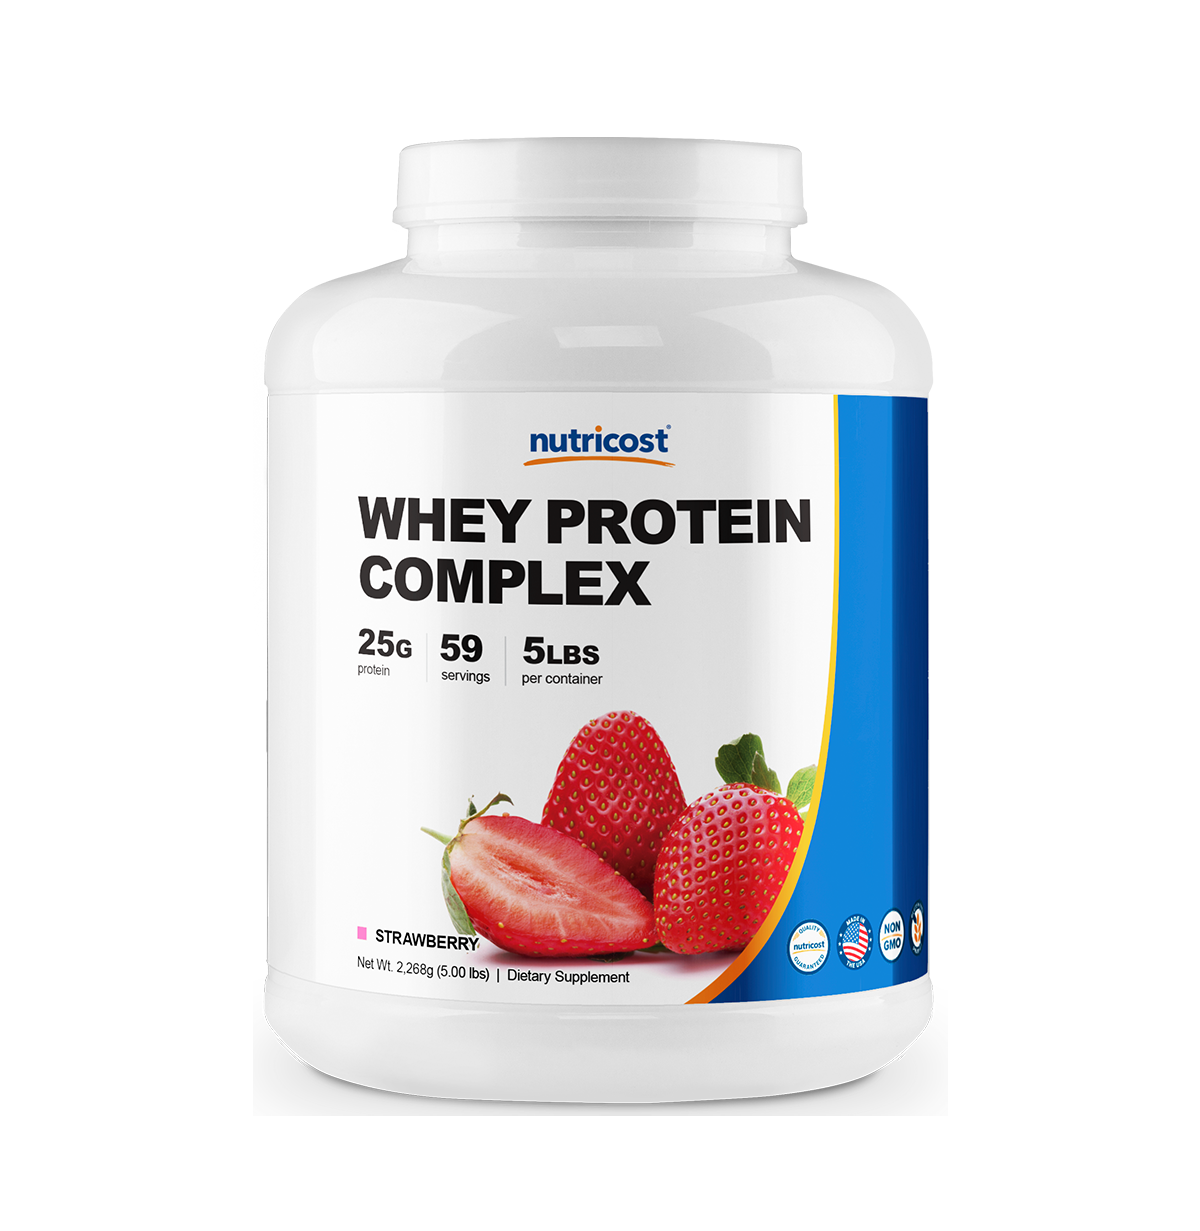 Nutricost Whey Protein Complex Powder